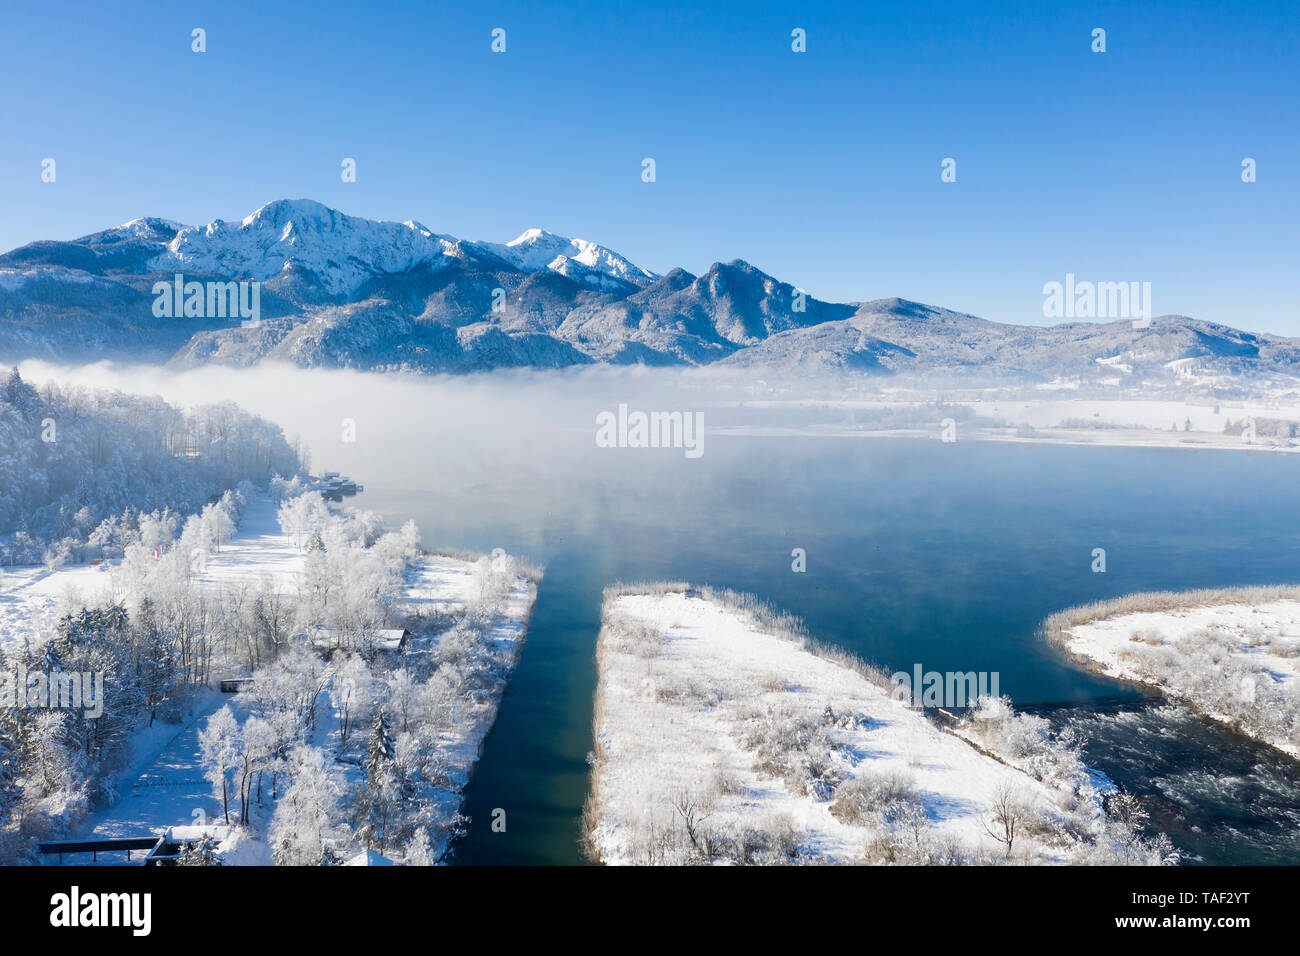 In Germania, in Baviera, Kochel, vista aerea del Lago di Kochel in inverno, in backgrund Herzogstand e Heimgarten Foto Stock